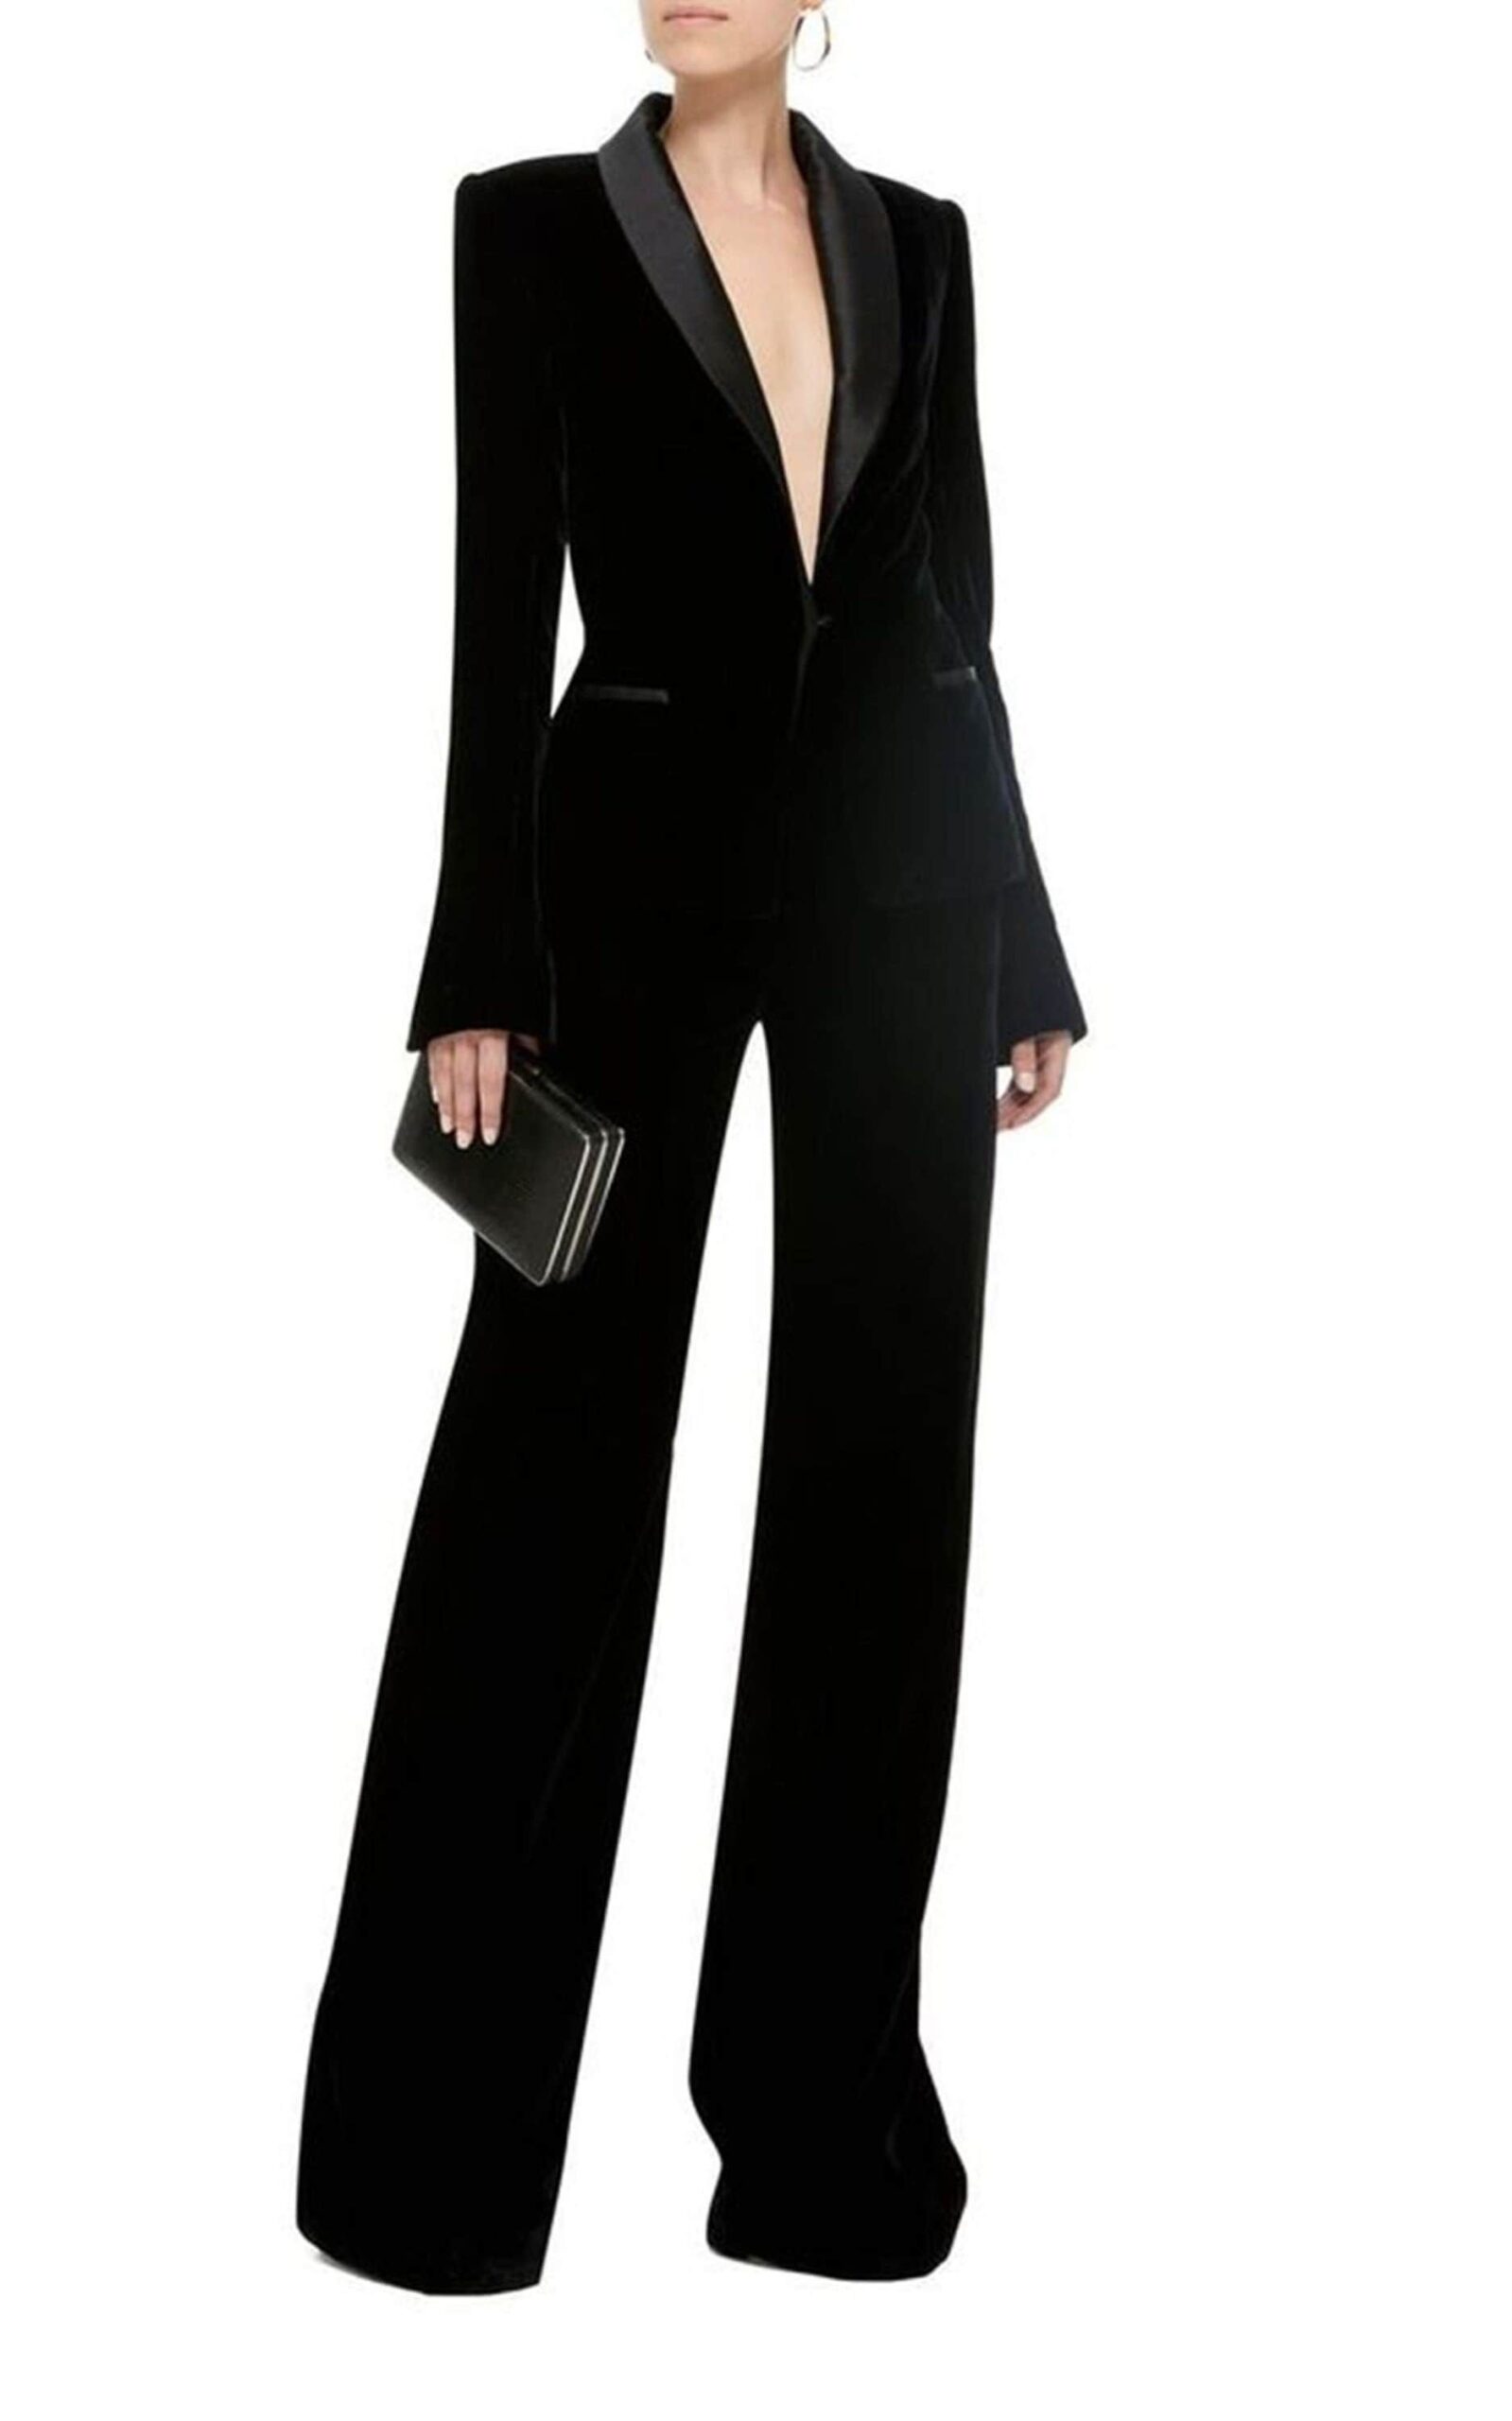 Amazing Blazer Suit Ideas for the very stylish women